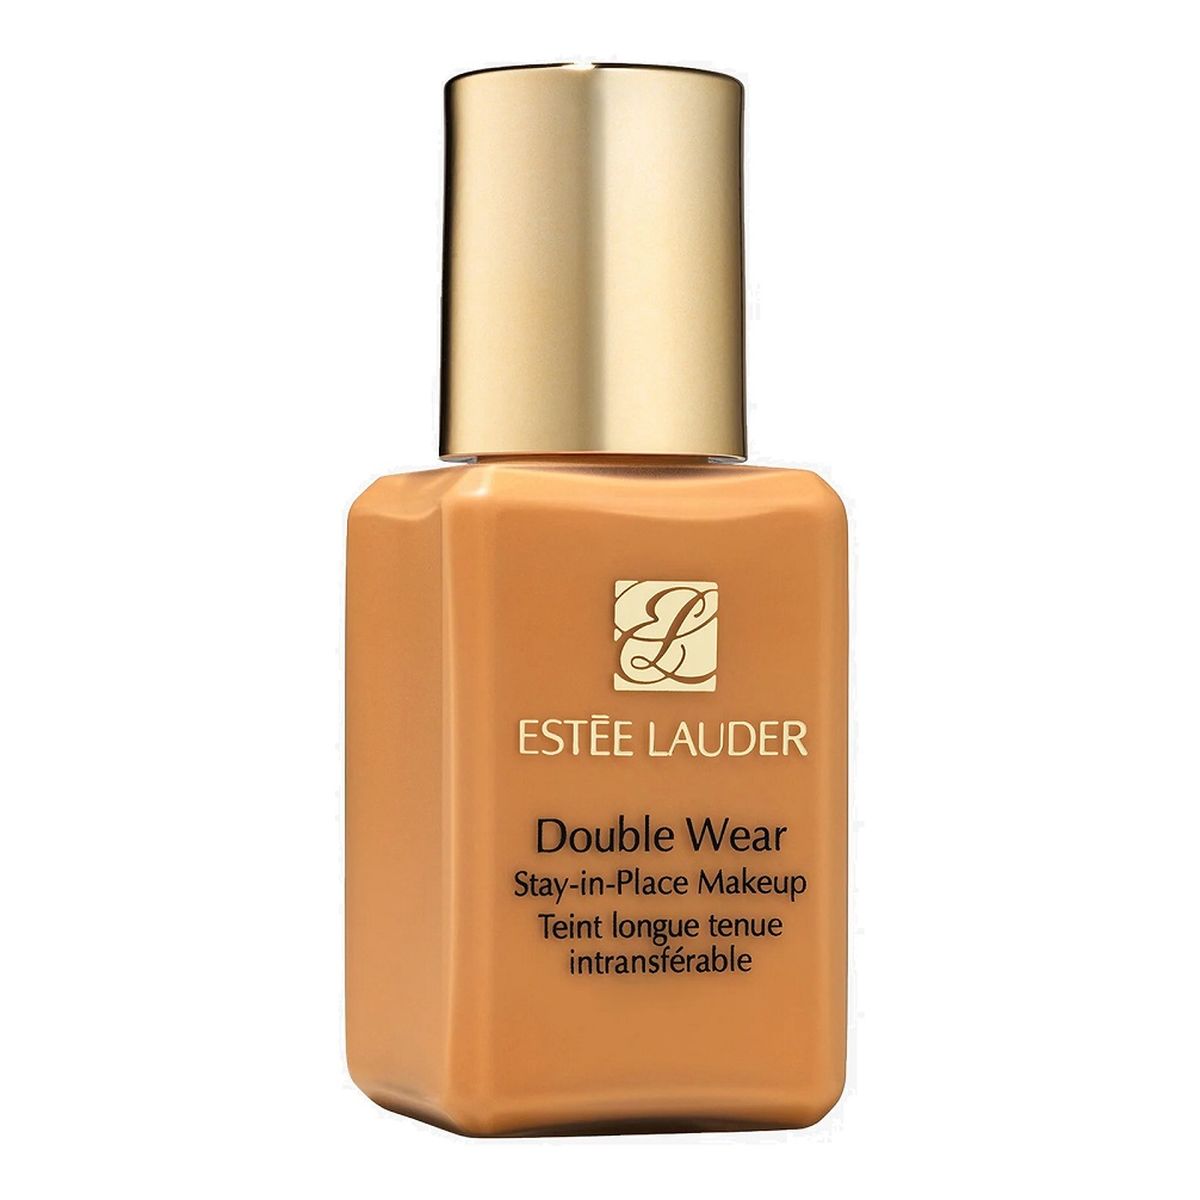 Estee Lauder Double Wear Stay-In-Place Makeup SPF10 długotrwały podkład do twarzy 15ml